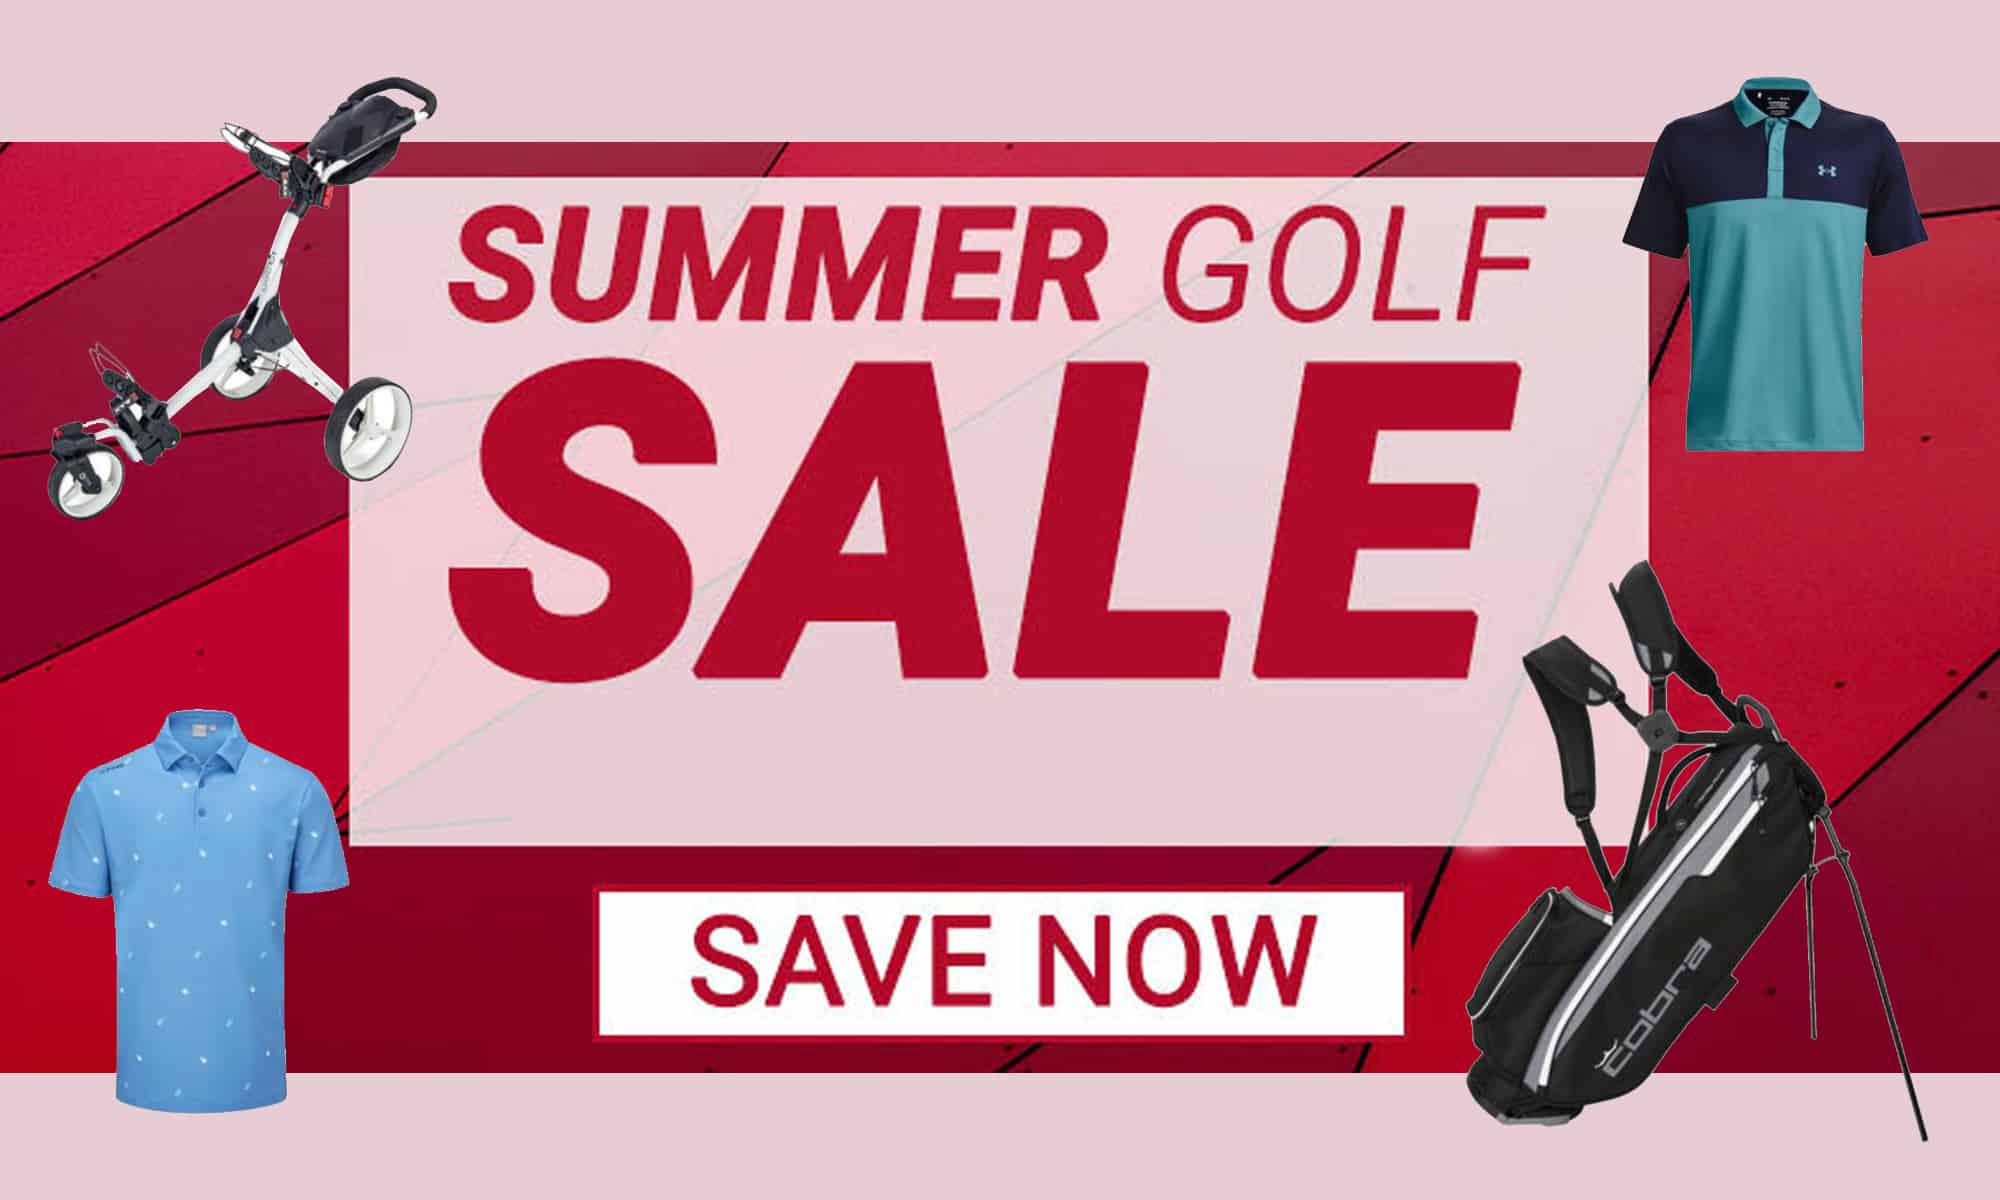 Golf Gear Direct Summer Sale!